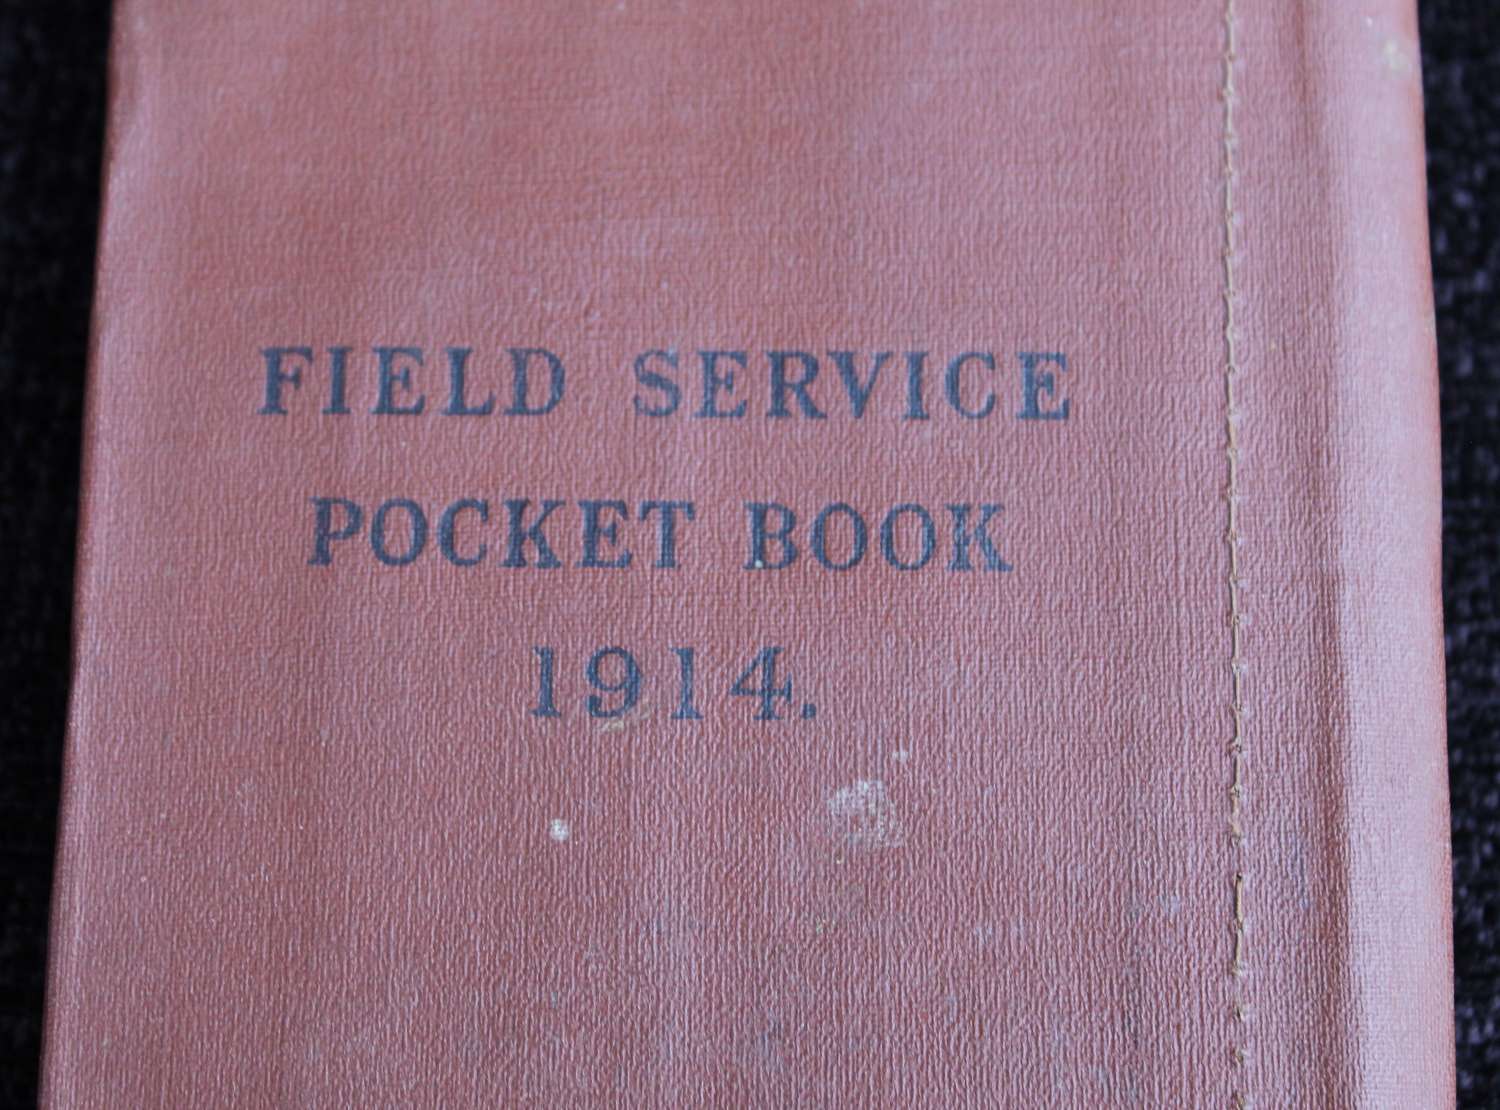 Field Service Pocket Book Hants RFA